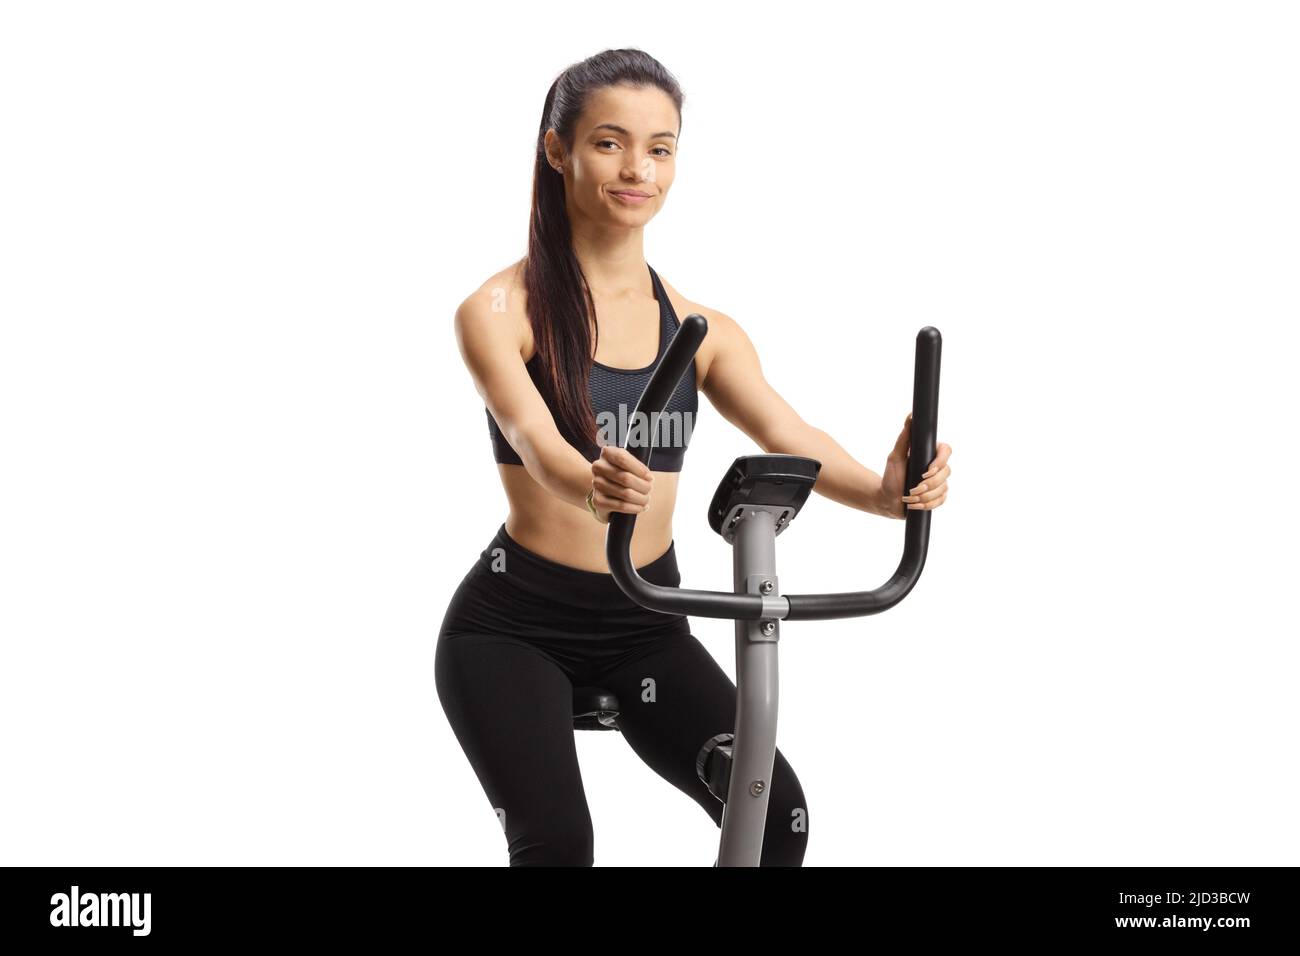 Young female exercising on a stationary bike isolated on white background Stock Photo